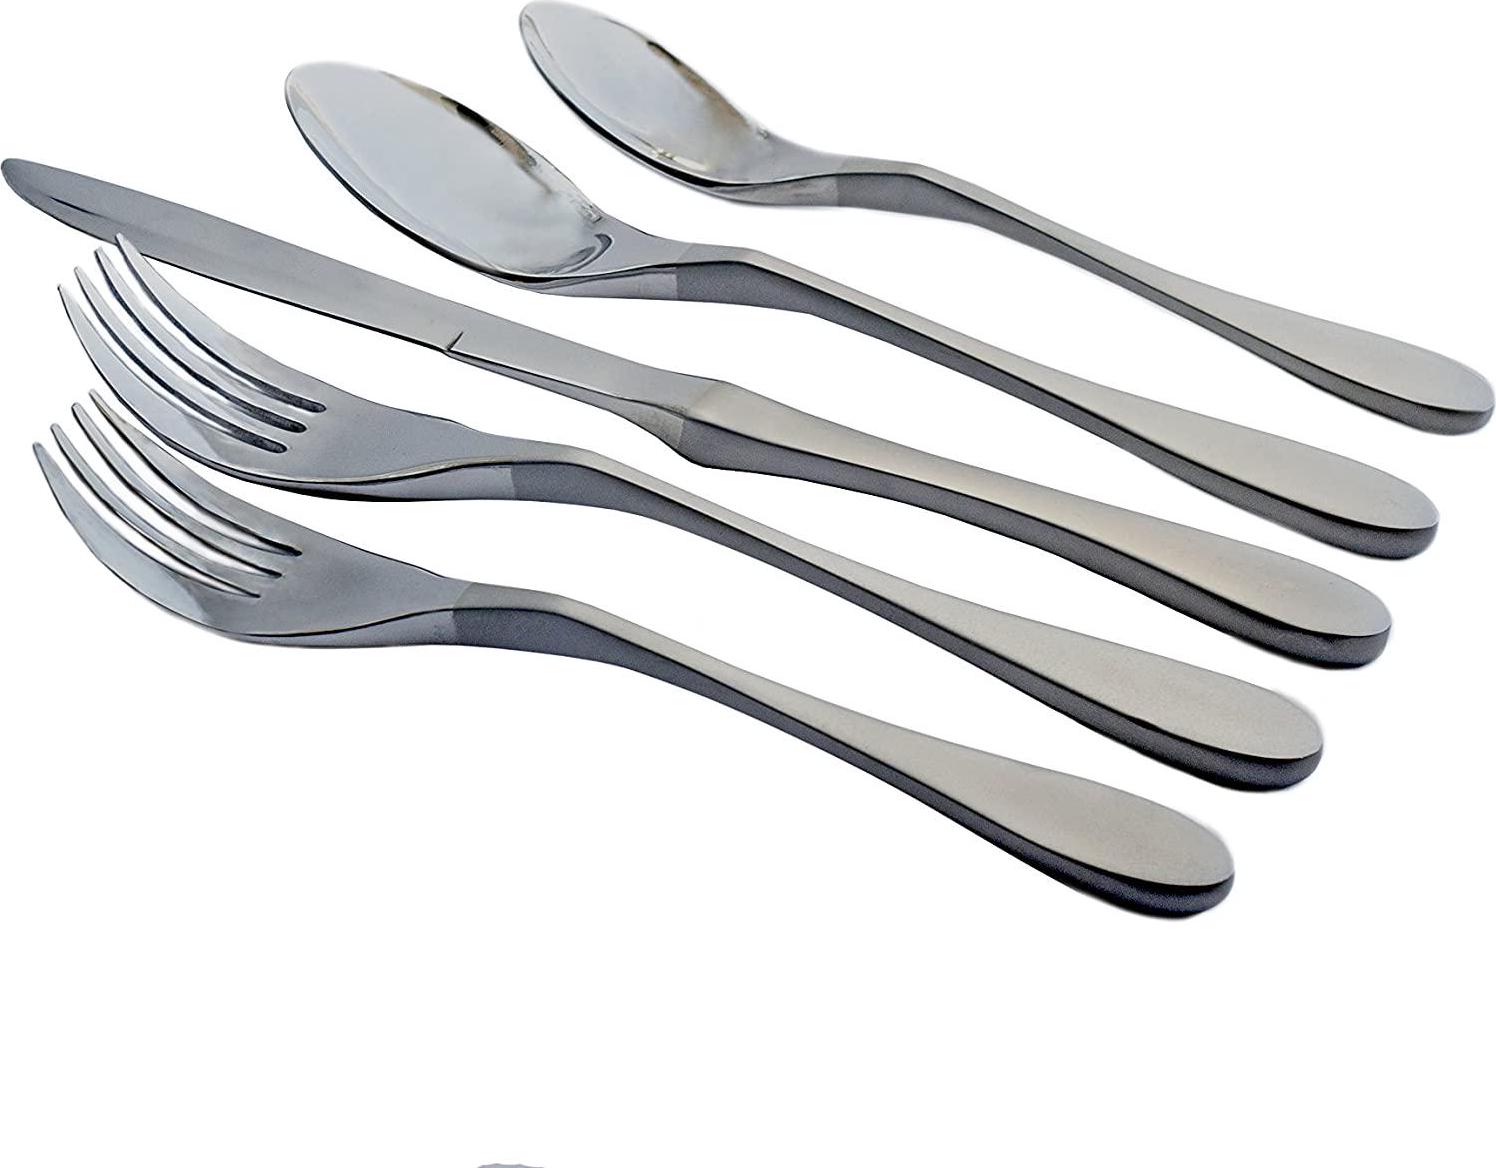 KNORK, Knork Original Cutlery Utensils Flatware Set, 20 Piece (Service for 4), Duo Silver